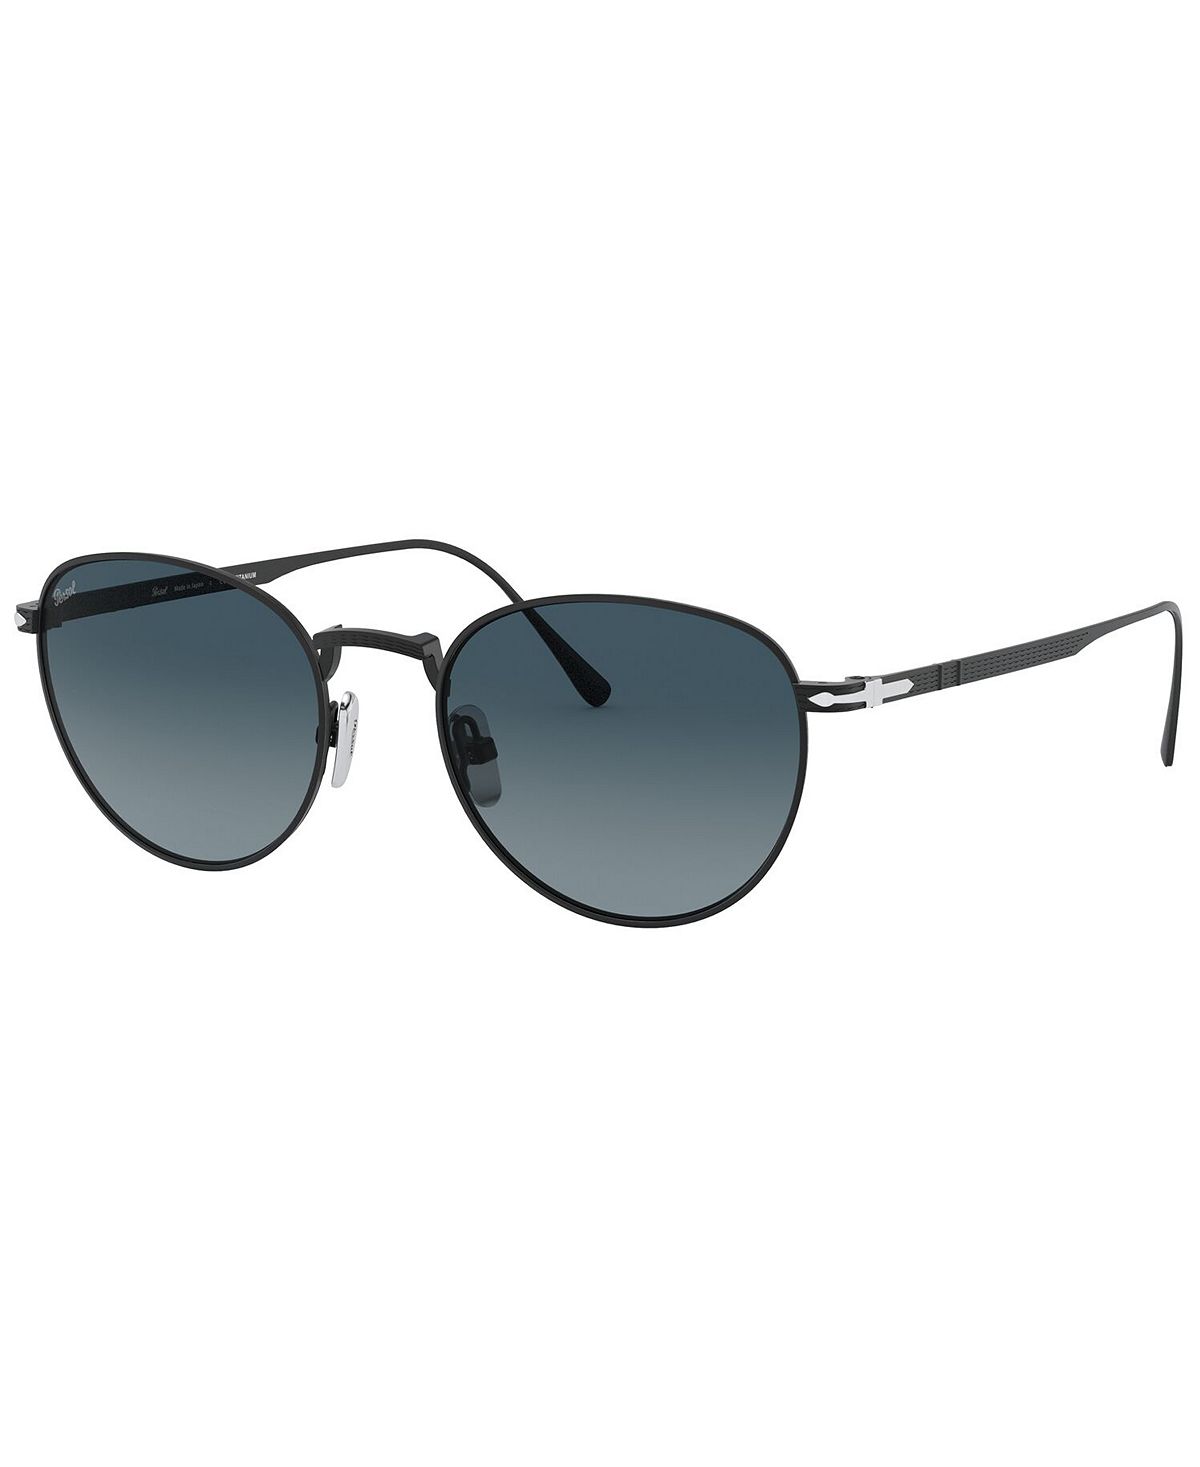 Мужские солнцезащитные очки, PO5002ST Persol